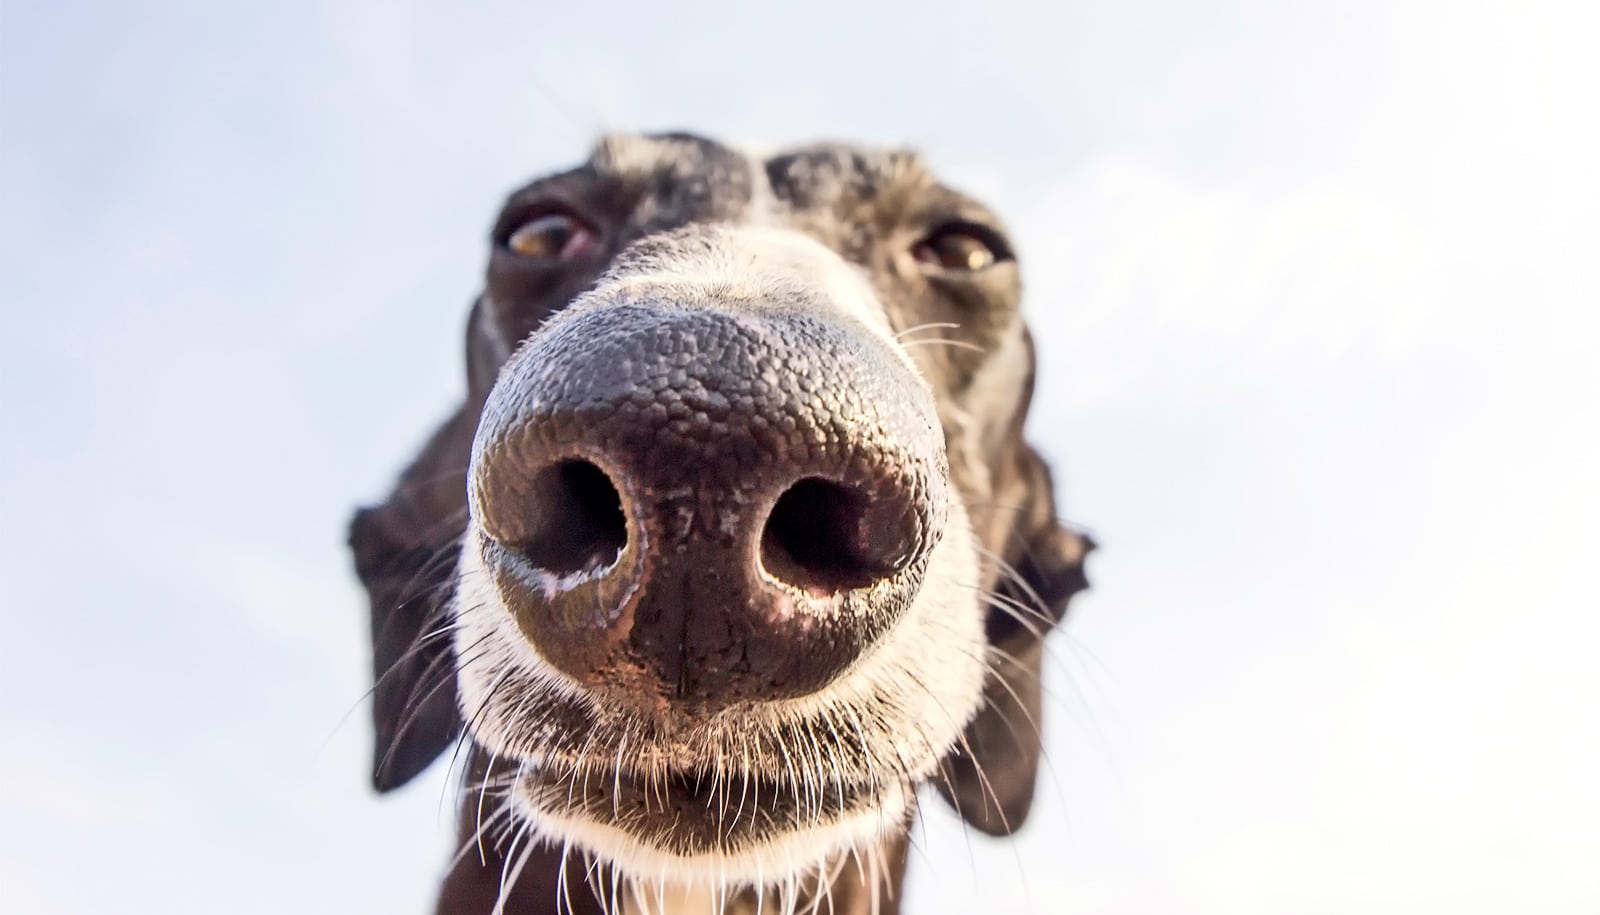 A dog puts its nose close to the camera.